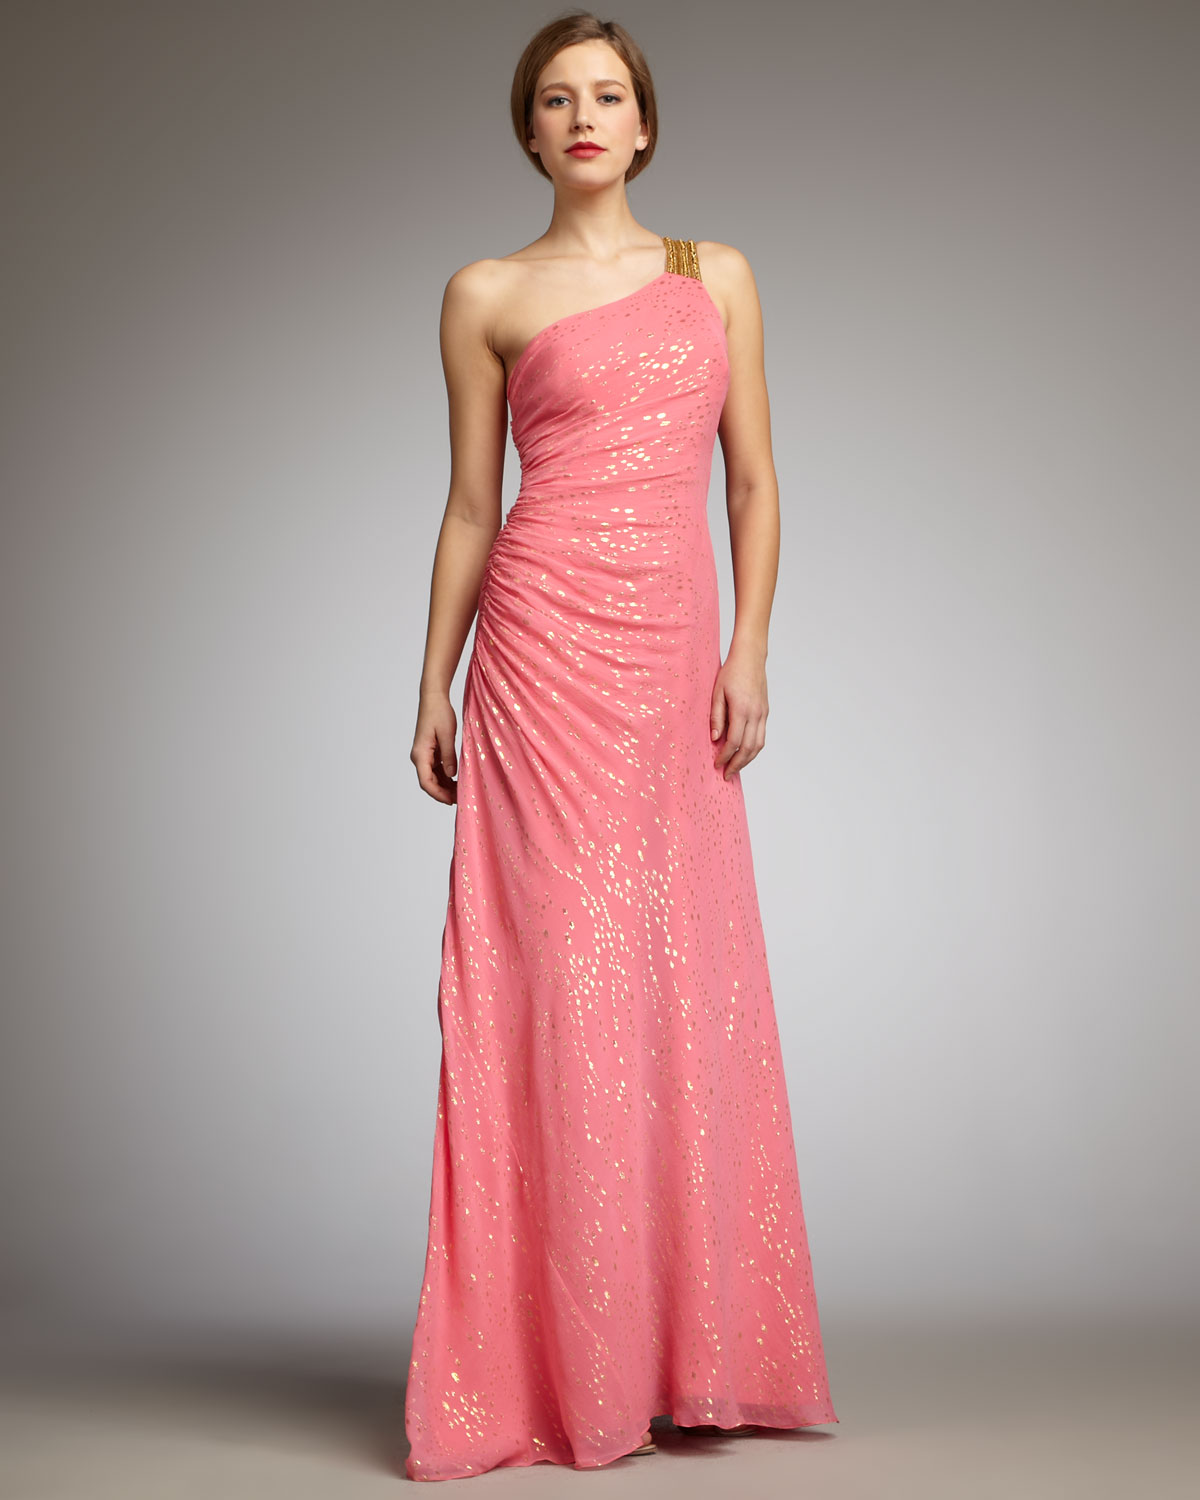 Lyst - Aidan Mattox One-shoulder Metallic Gown in Pink